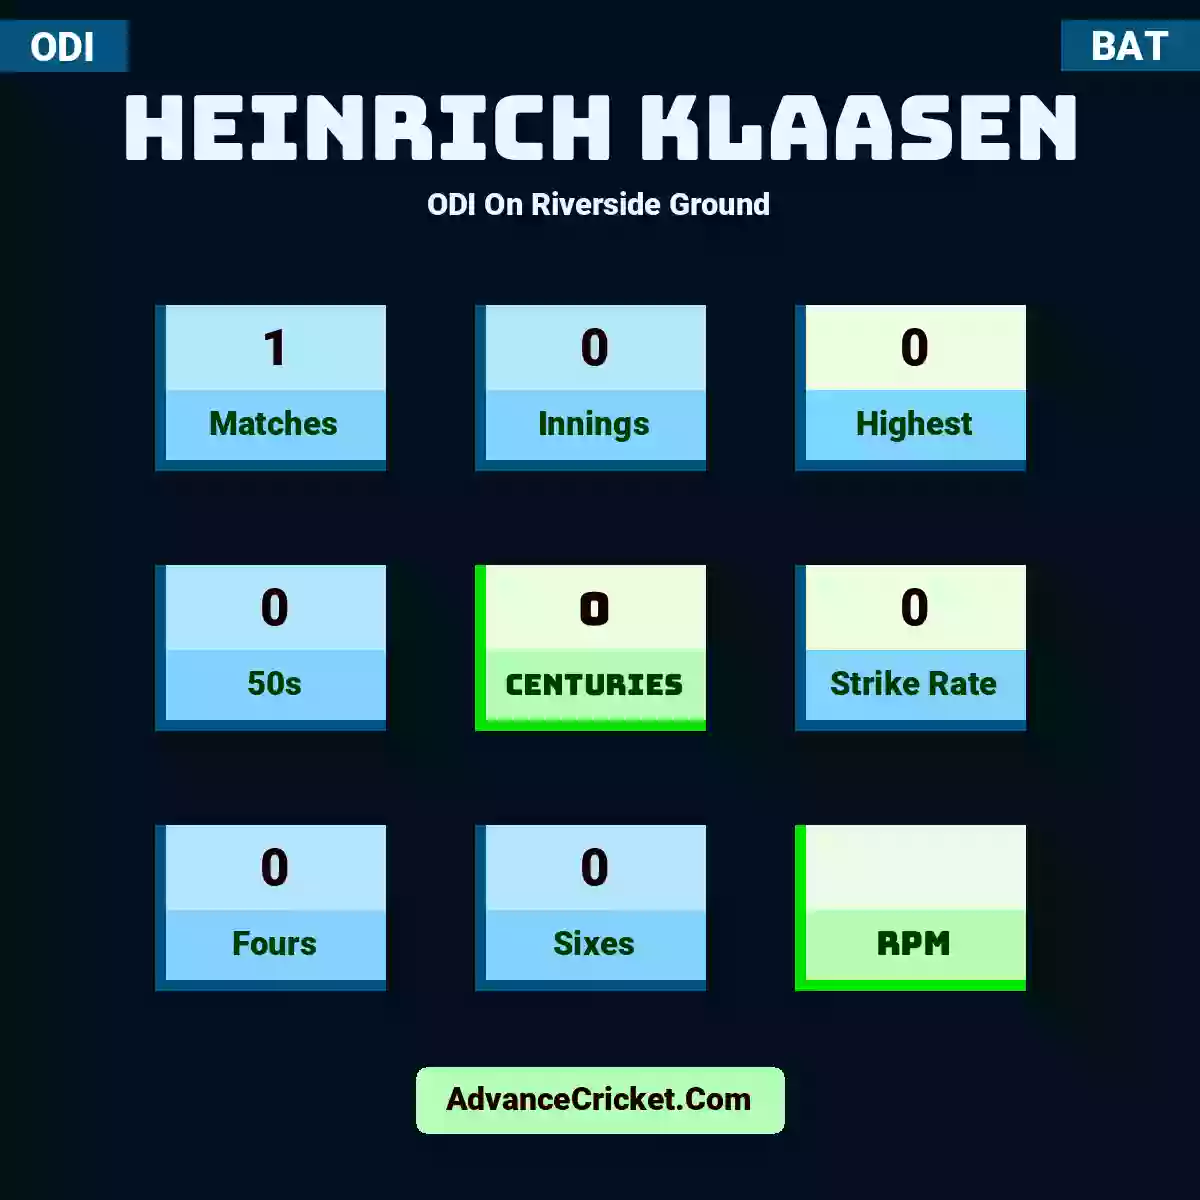 Heinrich Klaasen ODI  On Riverside Ground, Heinrich Klaasen played 1 matches, scored 0 runs as highest, 0 half-centuries, and 0 centuries, with a strike rate of 0. H.Klaasen hit 0 fours and 0 sixes.